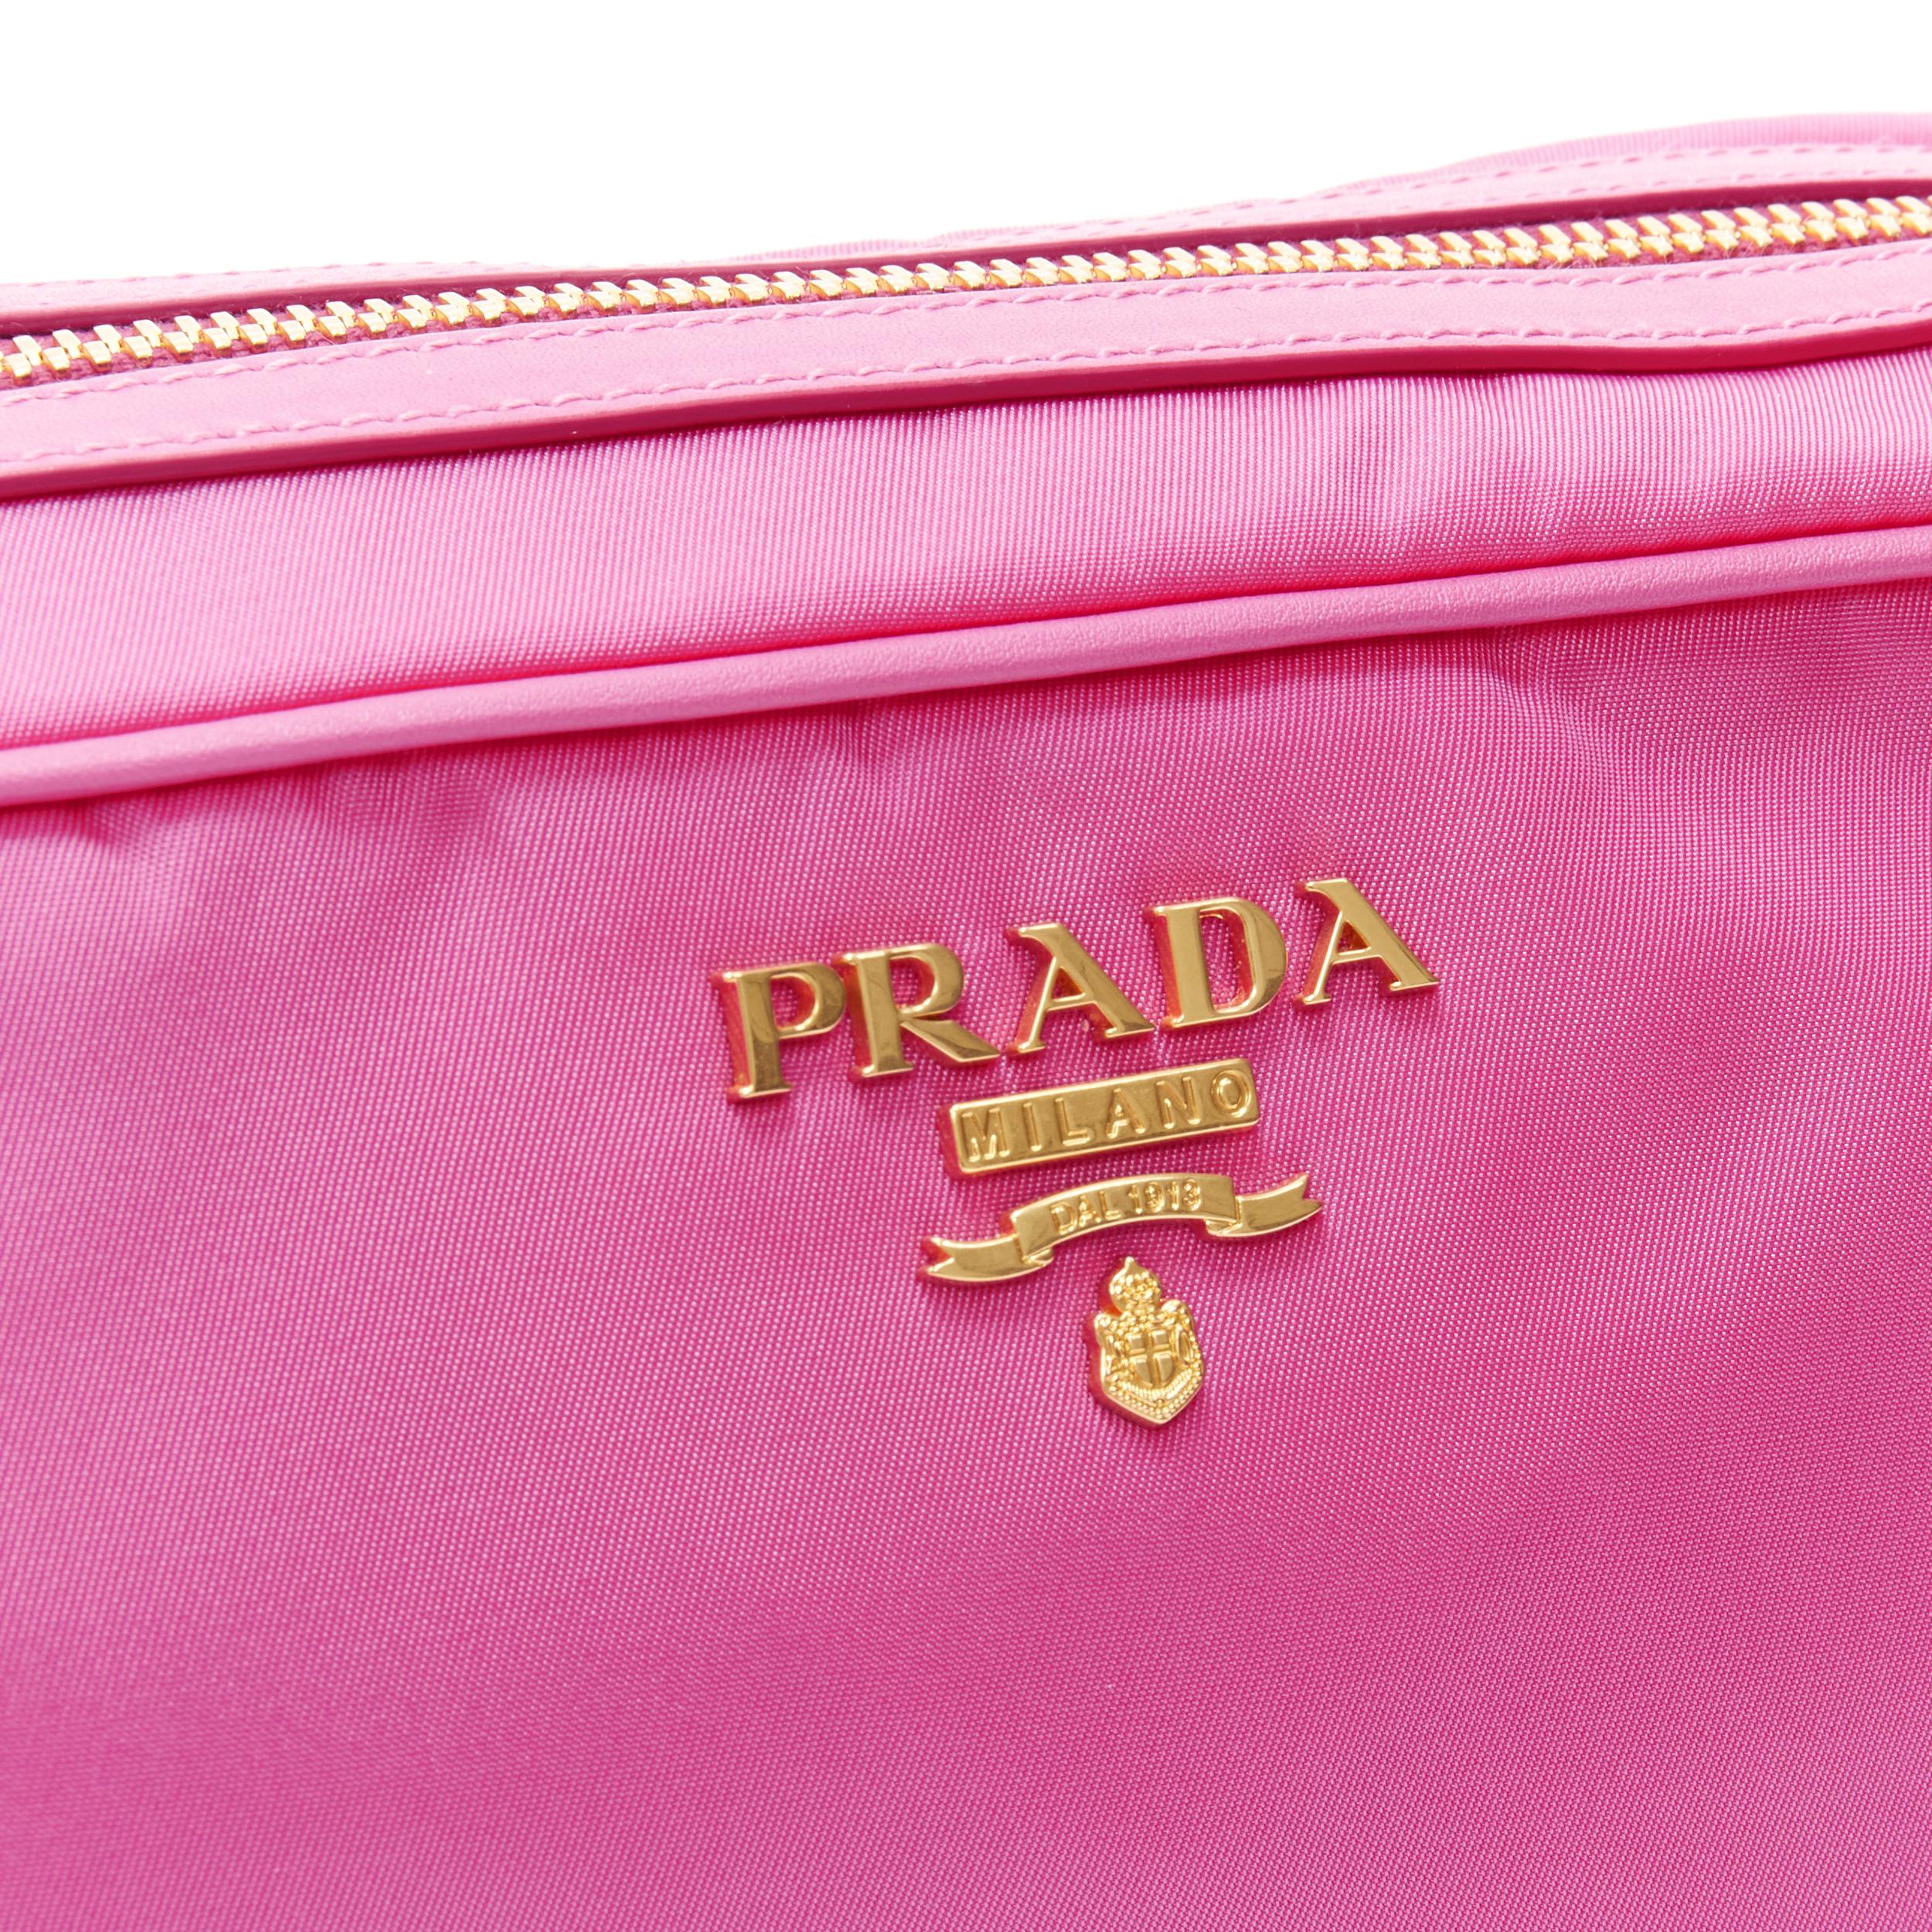 Pink PRADA bright pink Tessuto nylon gold logo crossbody camera bag